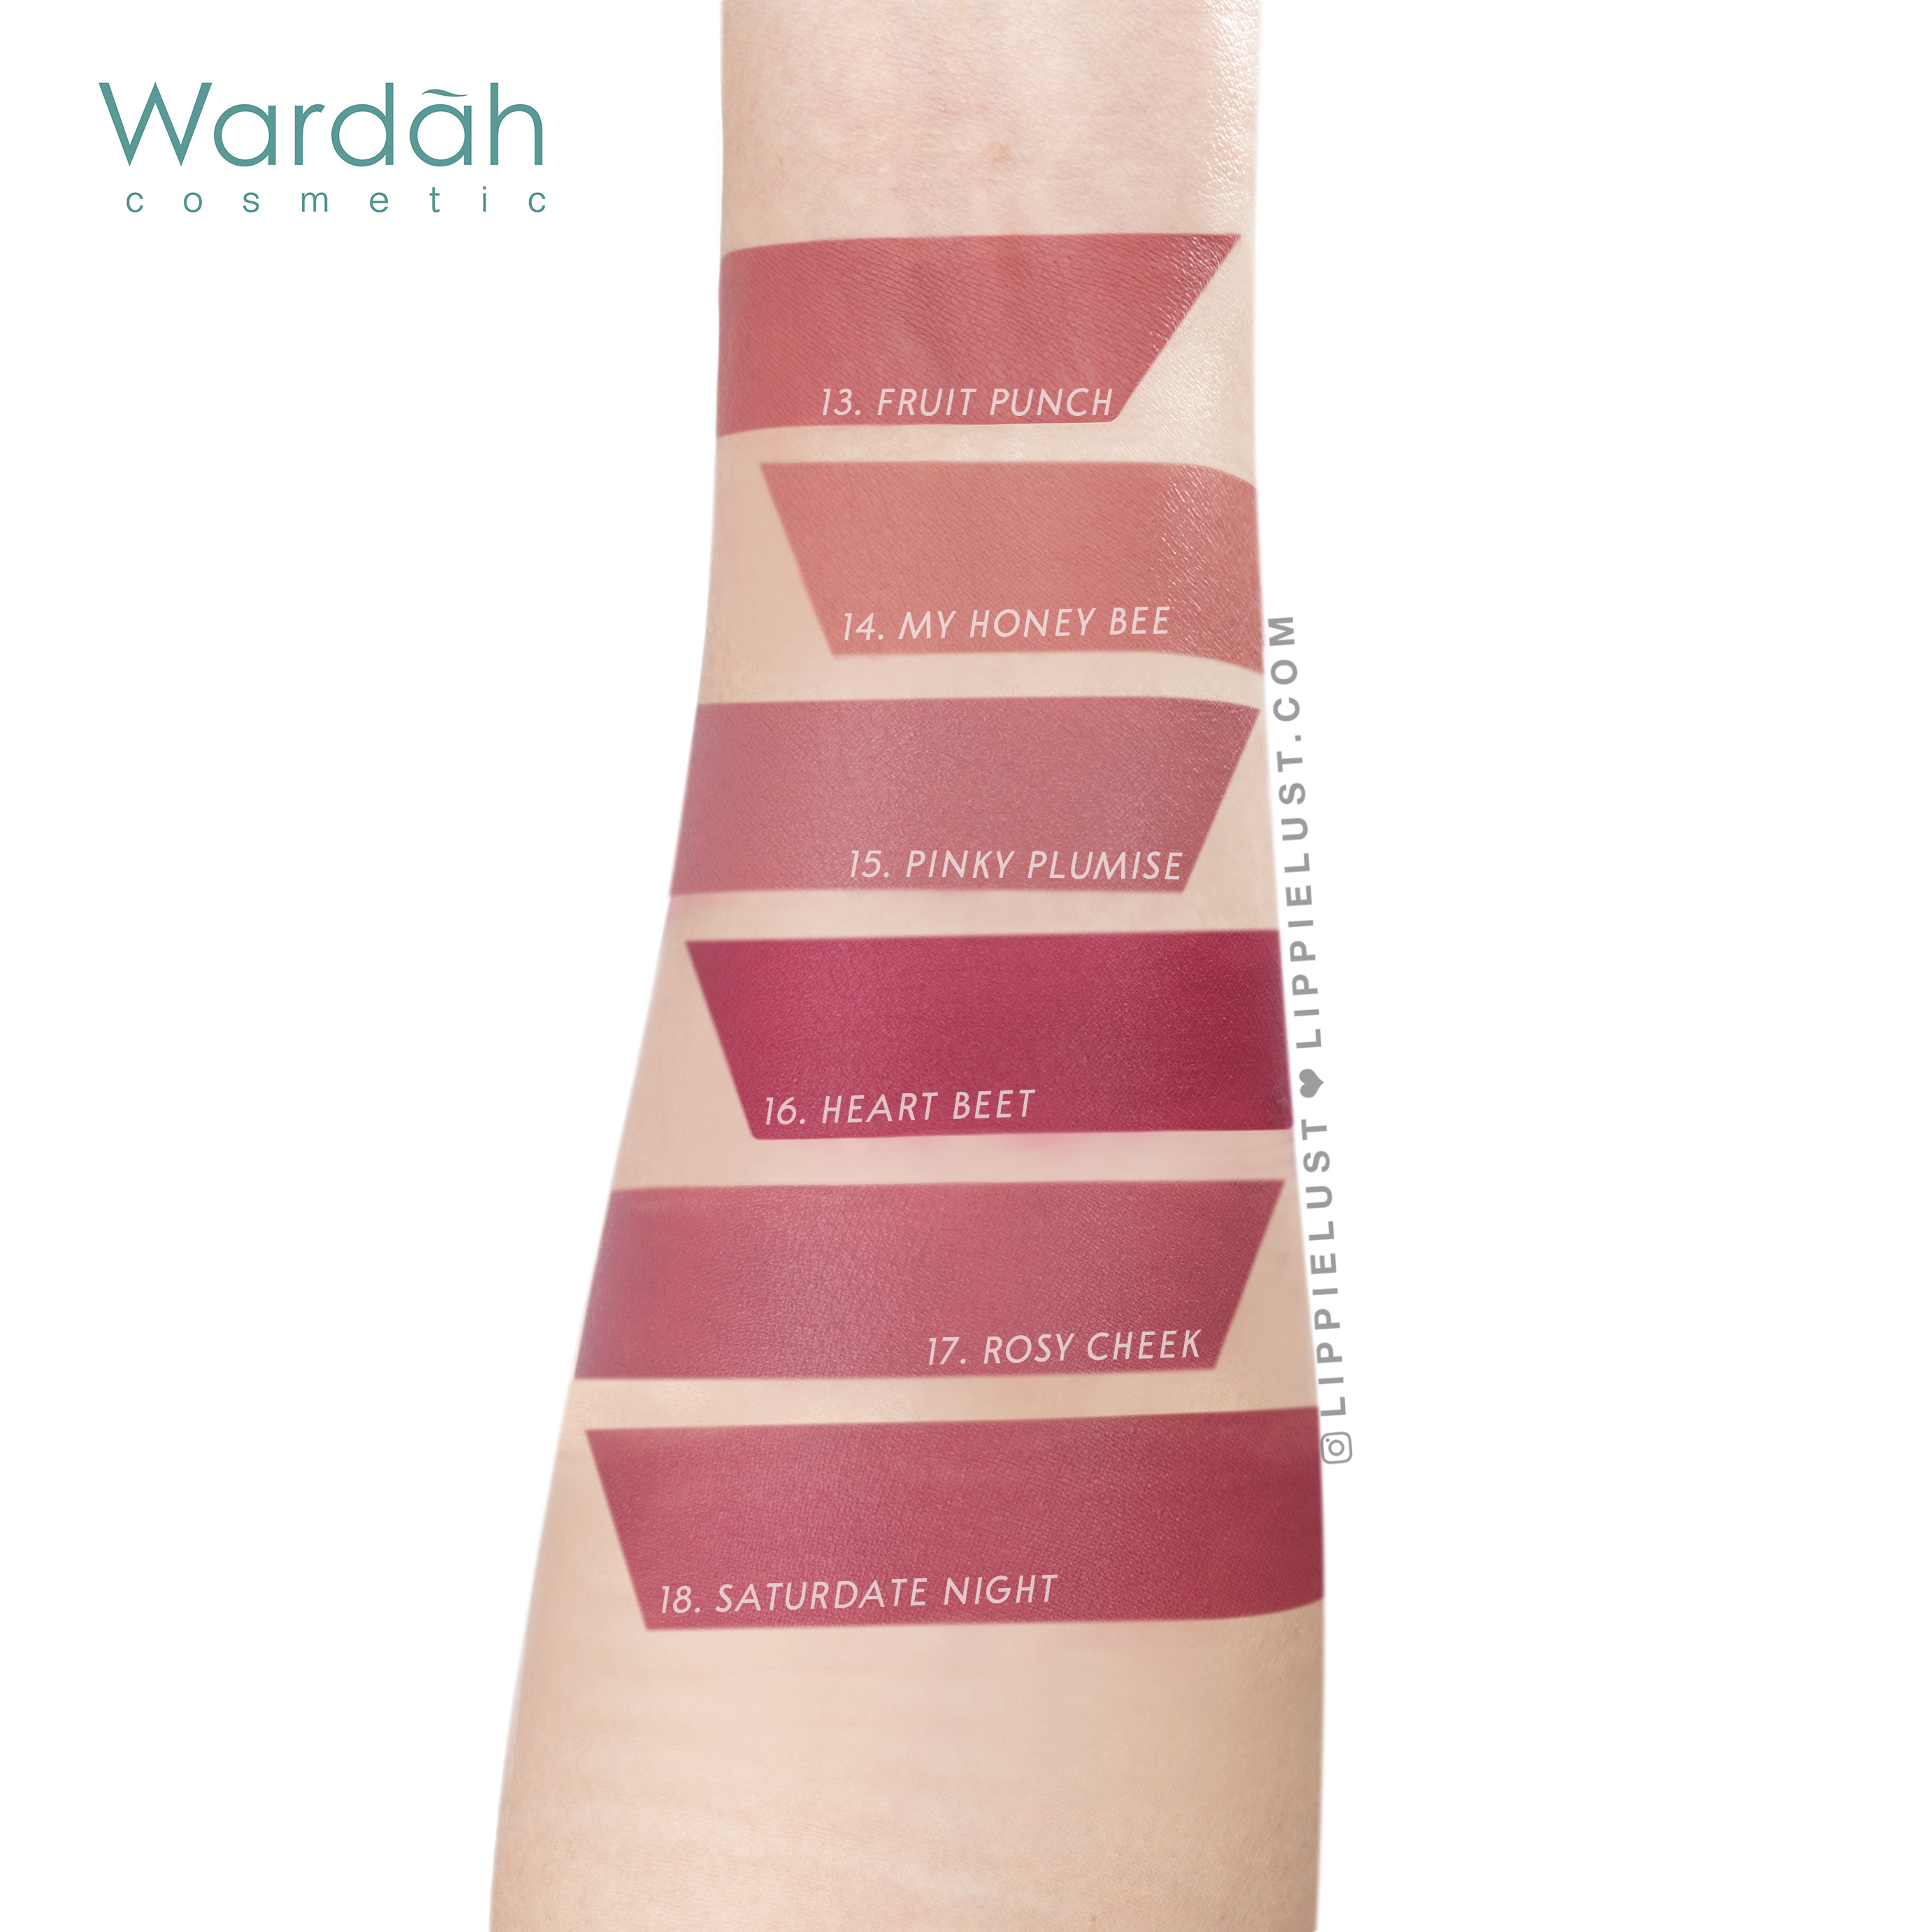 [SWATCH & REVIEW] Wardah Cosmetics Exclusive Matte Lip